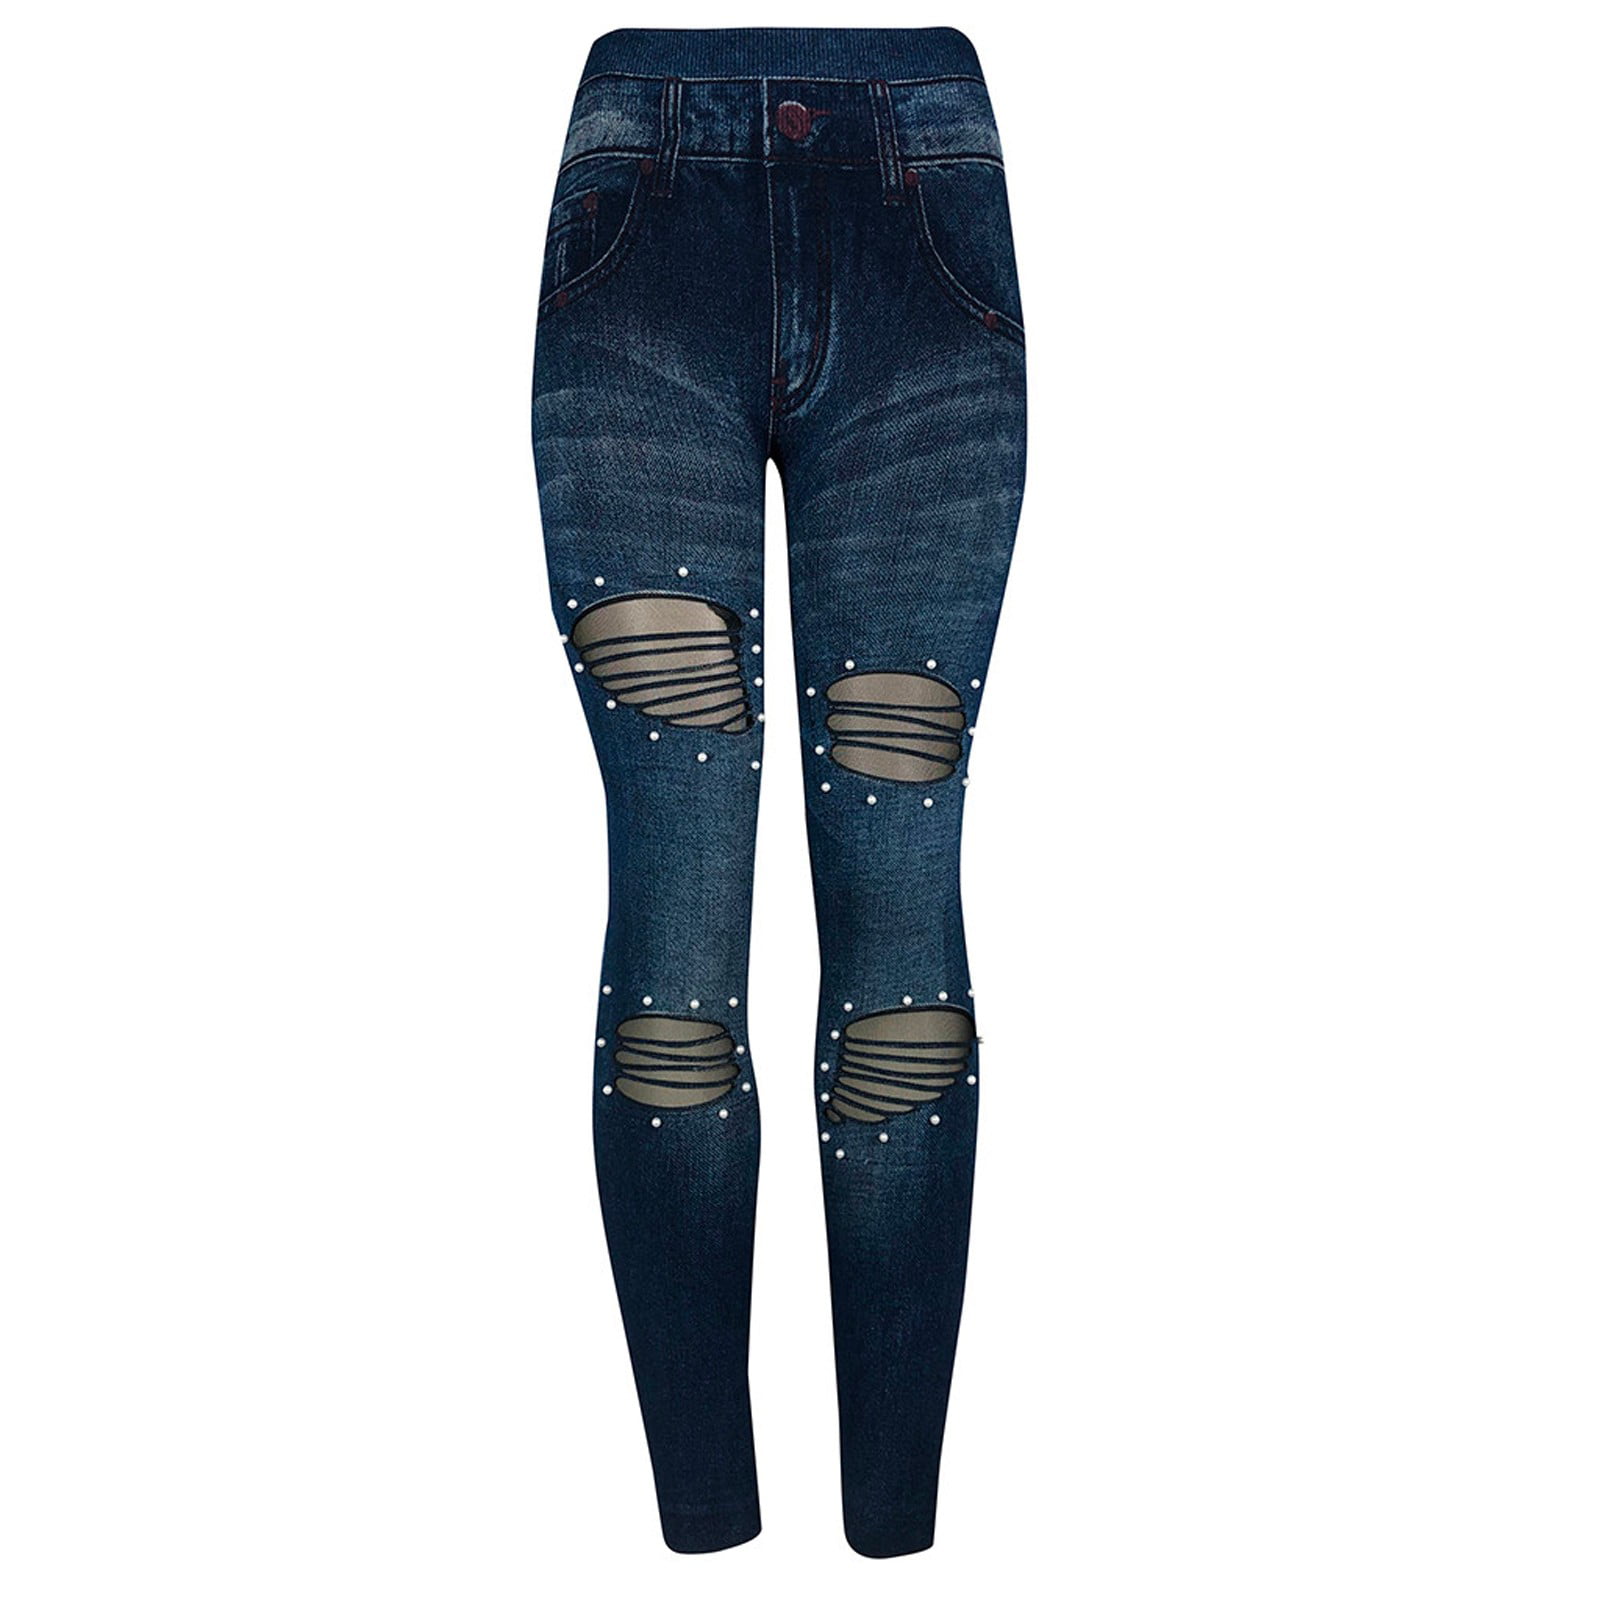 ZXHACSJ Women's Stretchy Skinny Print Jeggings Lmitation Jeans Seamless  Ninth Pants Dark Blue S 